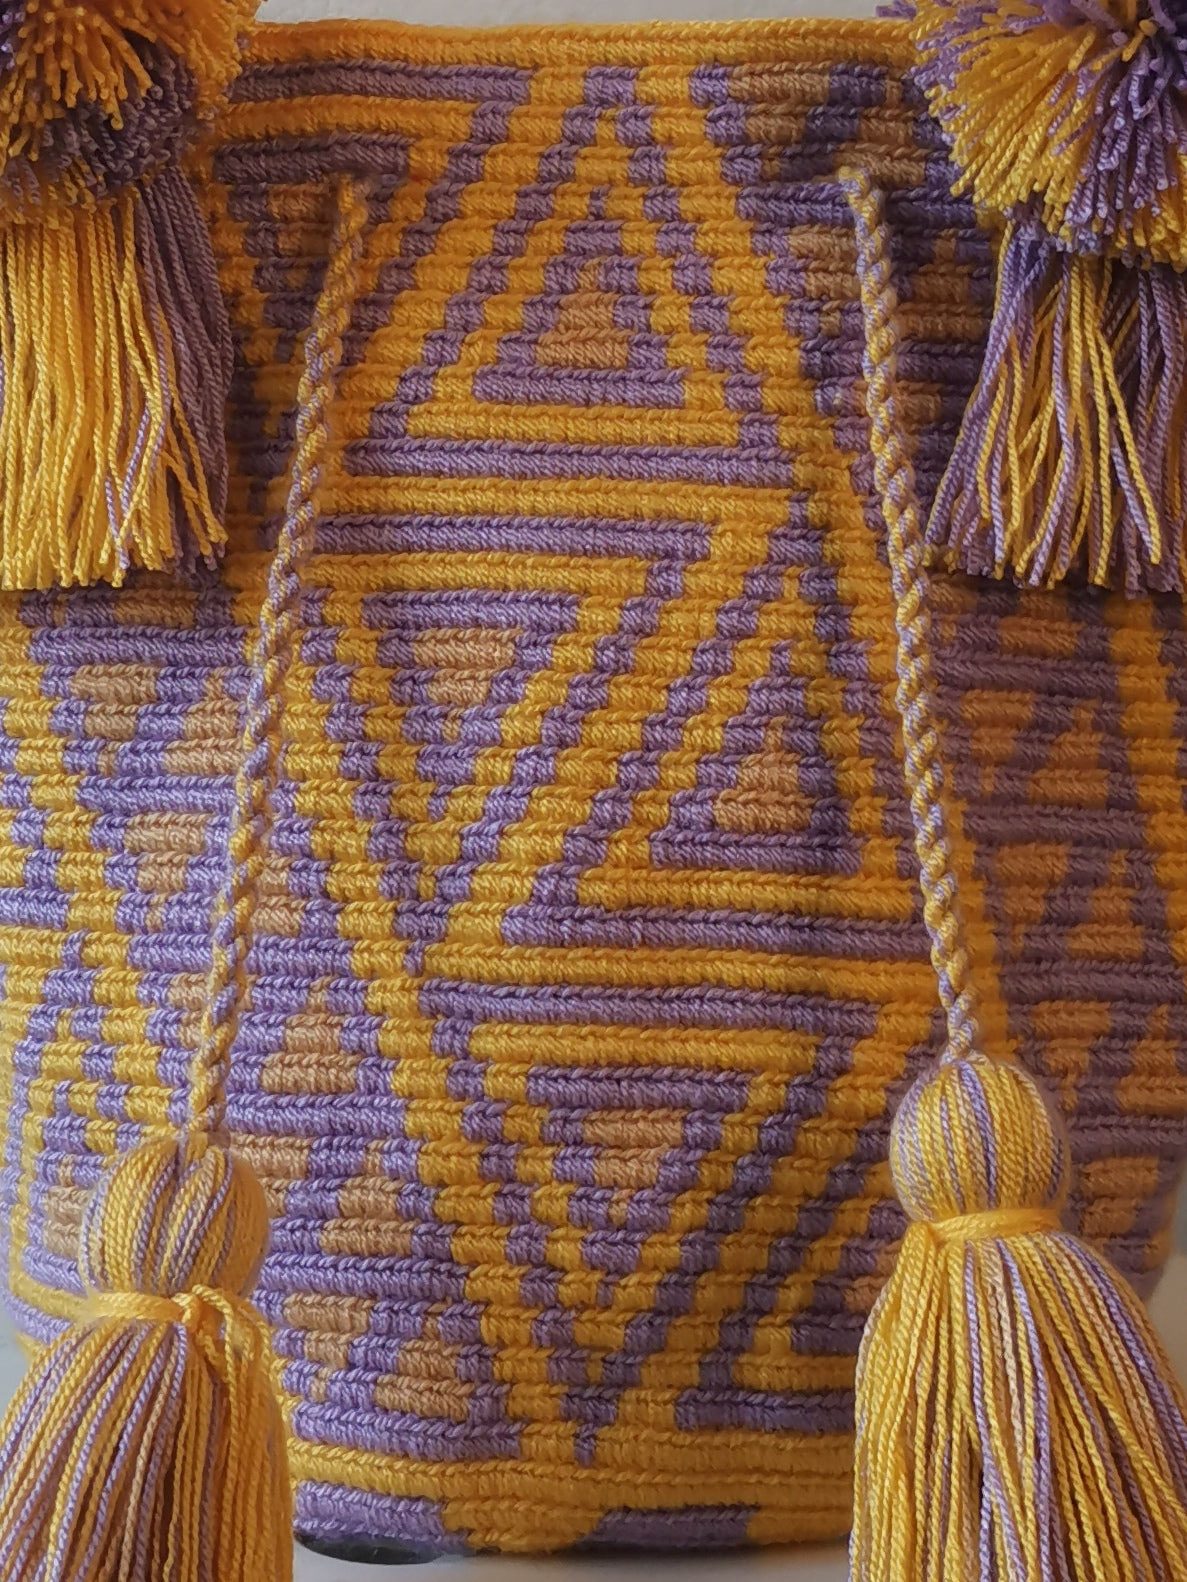 Yellow and lilac M mochila handbag